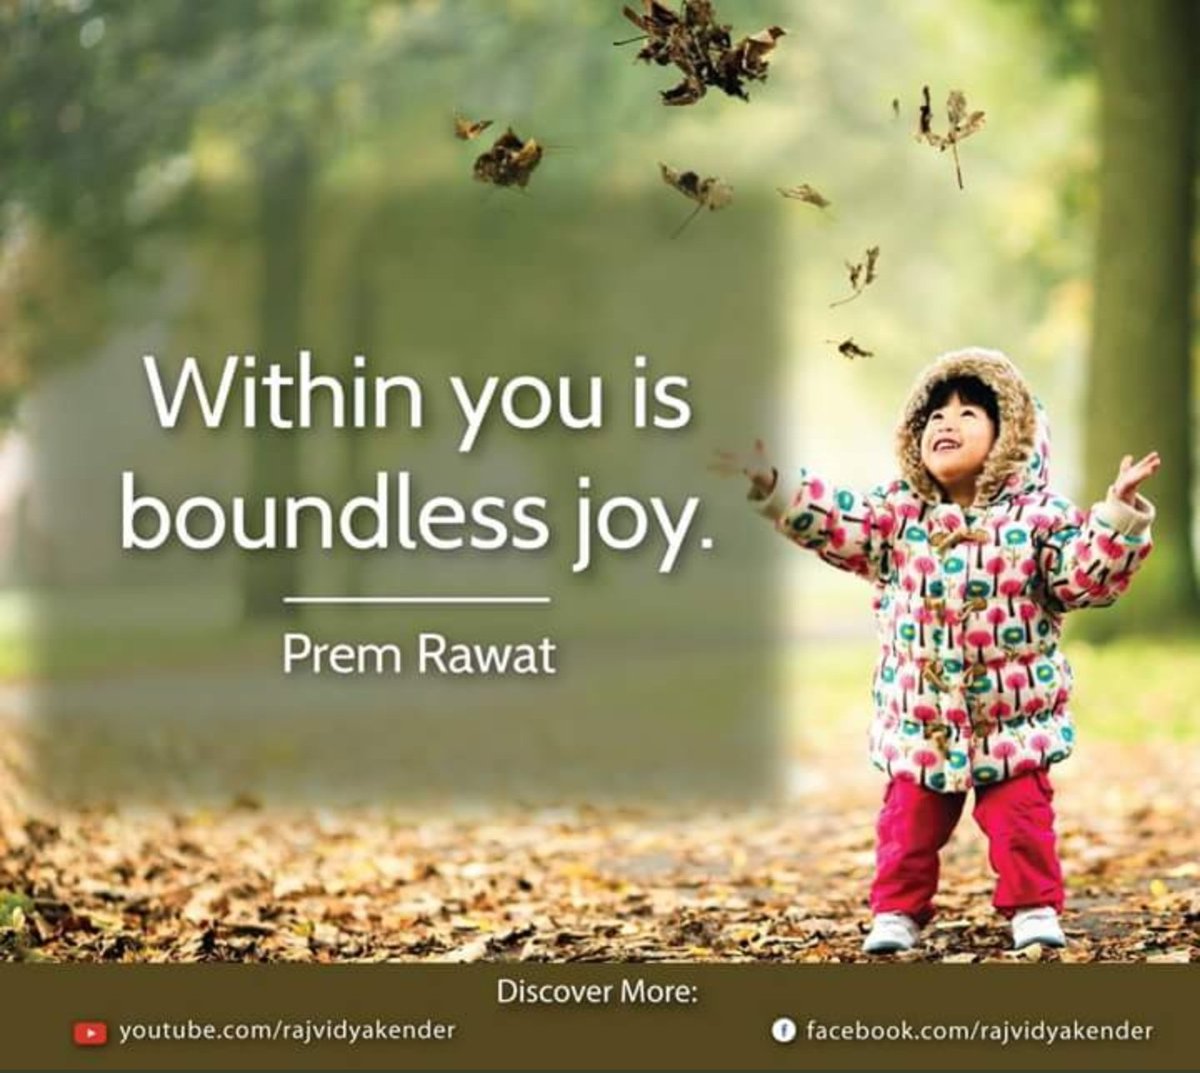 Prem Rawat 

#PremRawat #peaceispossible #peacemakers #peaceiswithinyou #wordsofpeace #wopg #Wisdom #hope #humanity #Happiness #fulfilment #joy #fun #TPRF #timelesstoday #ThePremRawatFoundation #anjantv #rajvidyakender #inspirational #inspired #quote